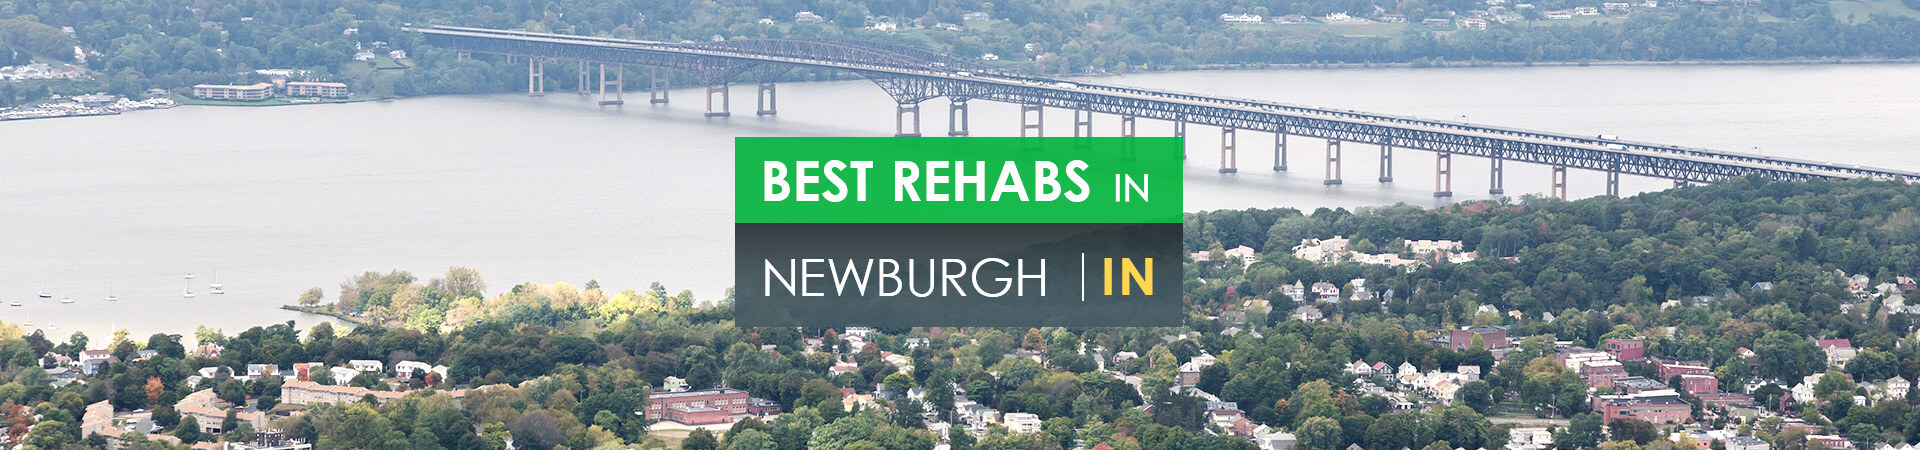 Best rehabs in Newburgh, IN